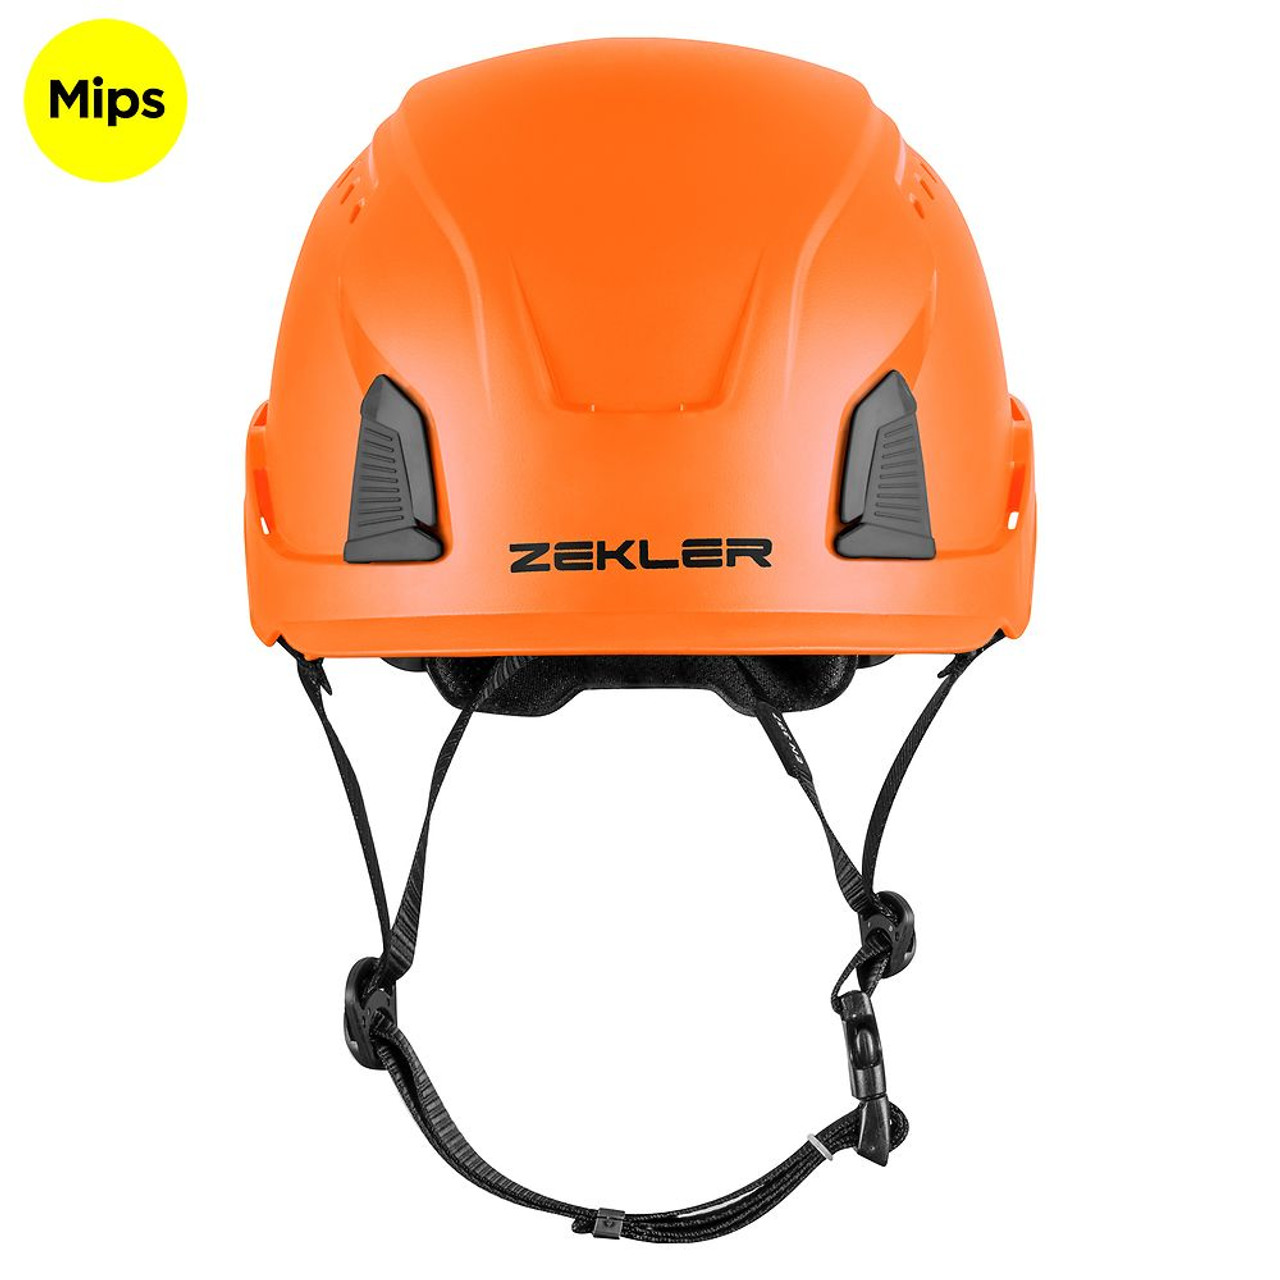 ZEKLER Helmet | ZONE Orange Technical Safety Helmet  for MIPS, Rope Access, Electricians, Construction, Workshops and Machinery Operators